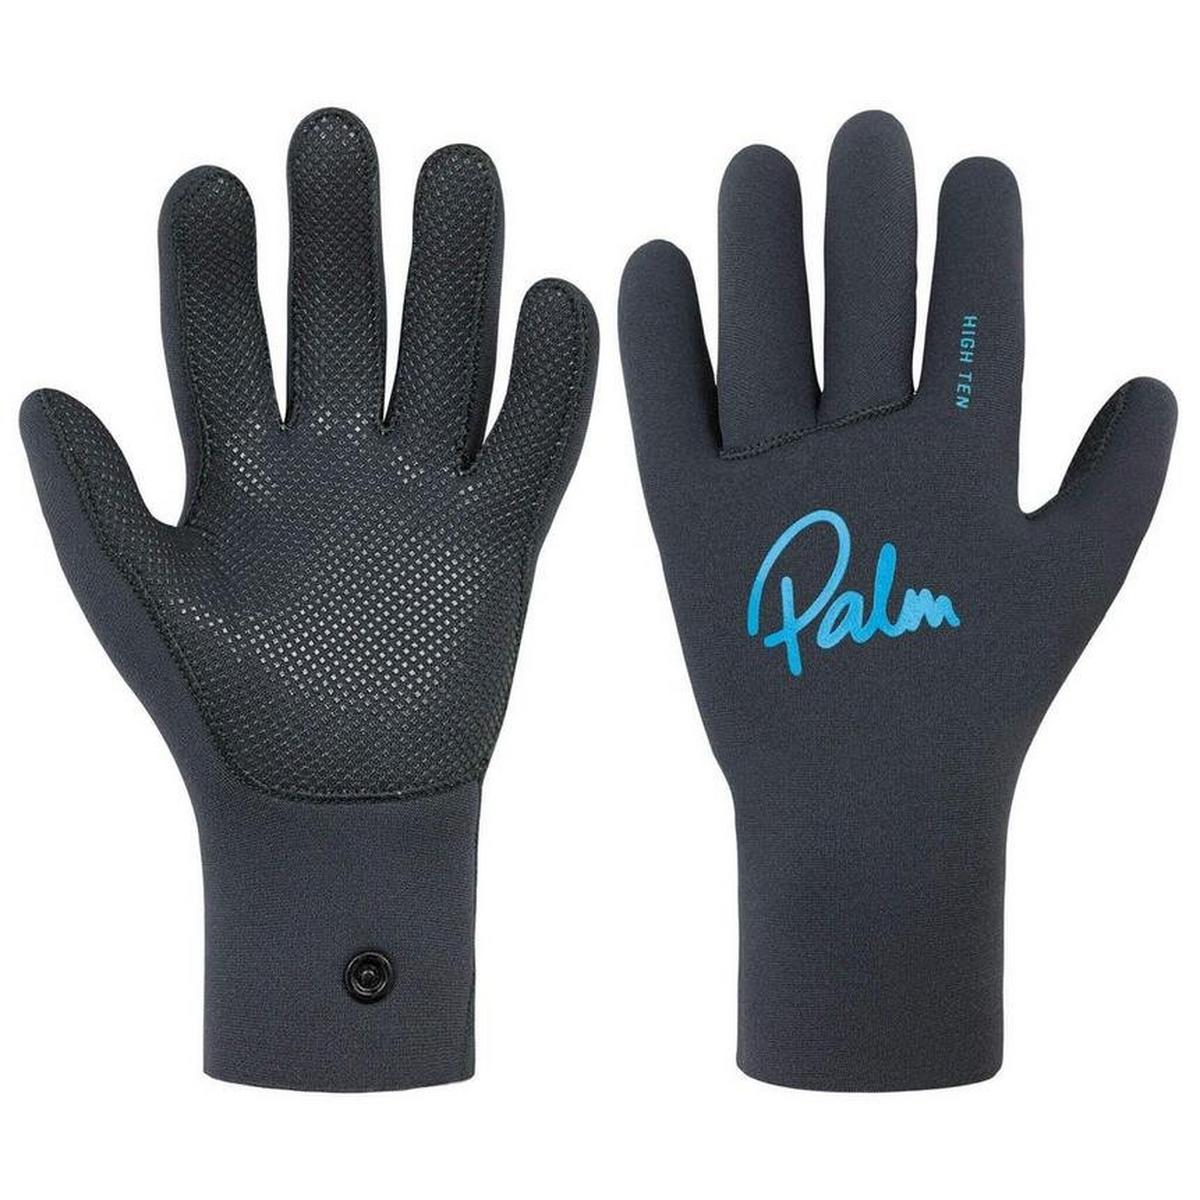 Palm High Ten Neoprene Glove